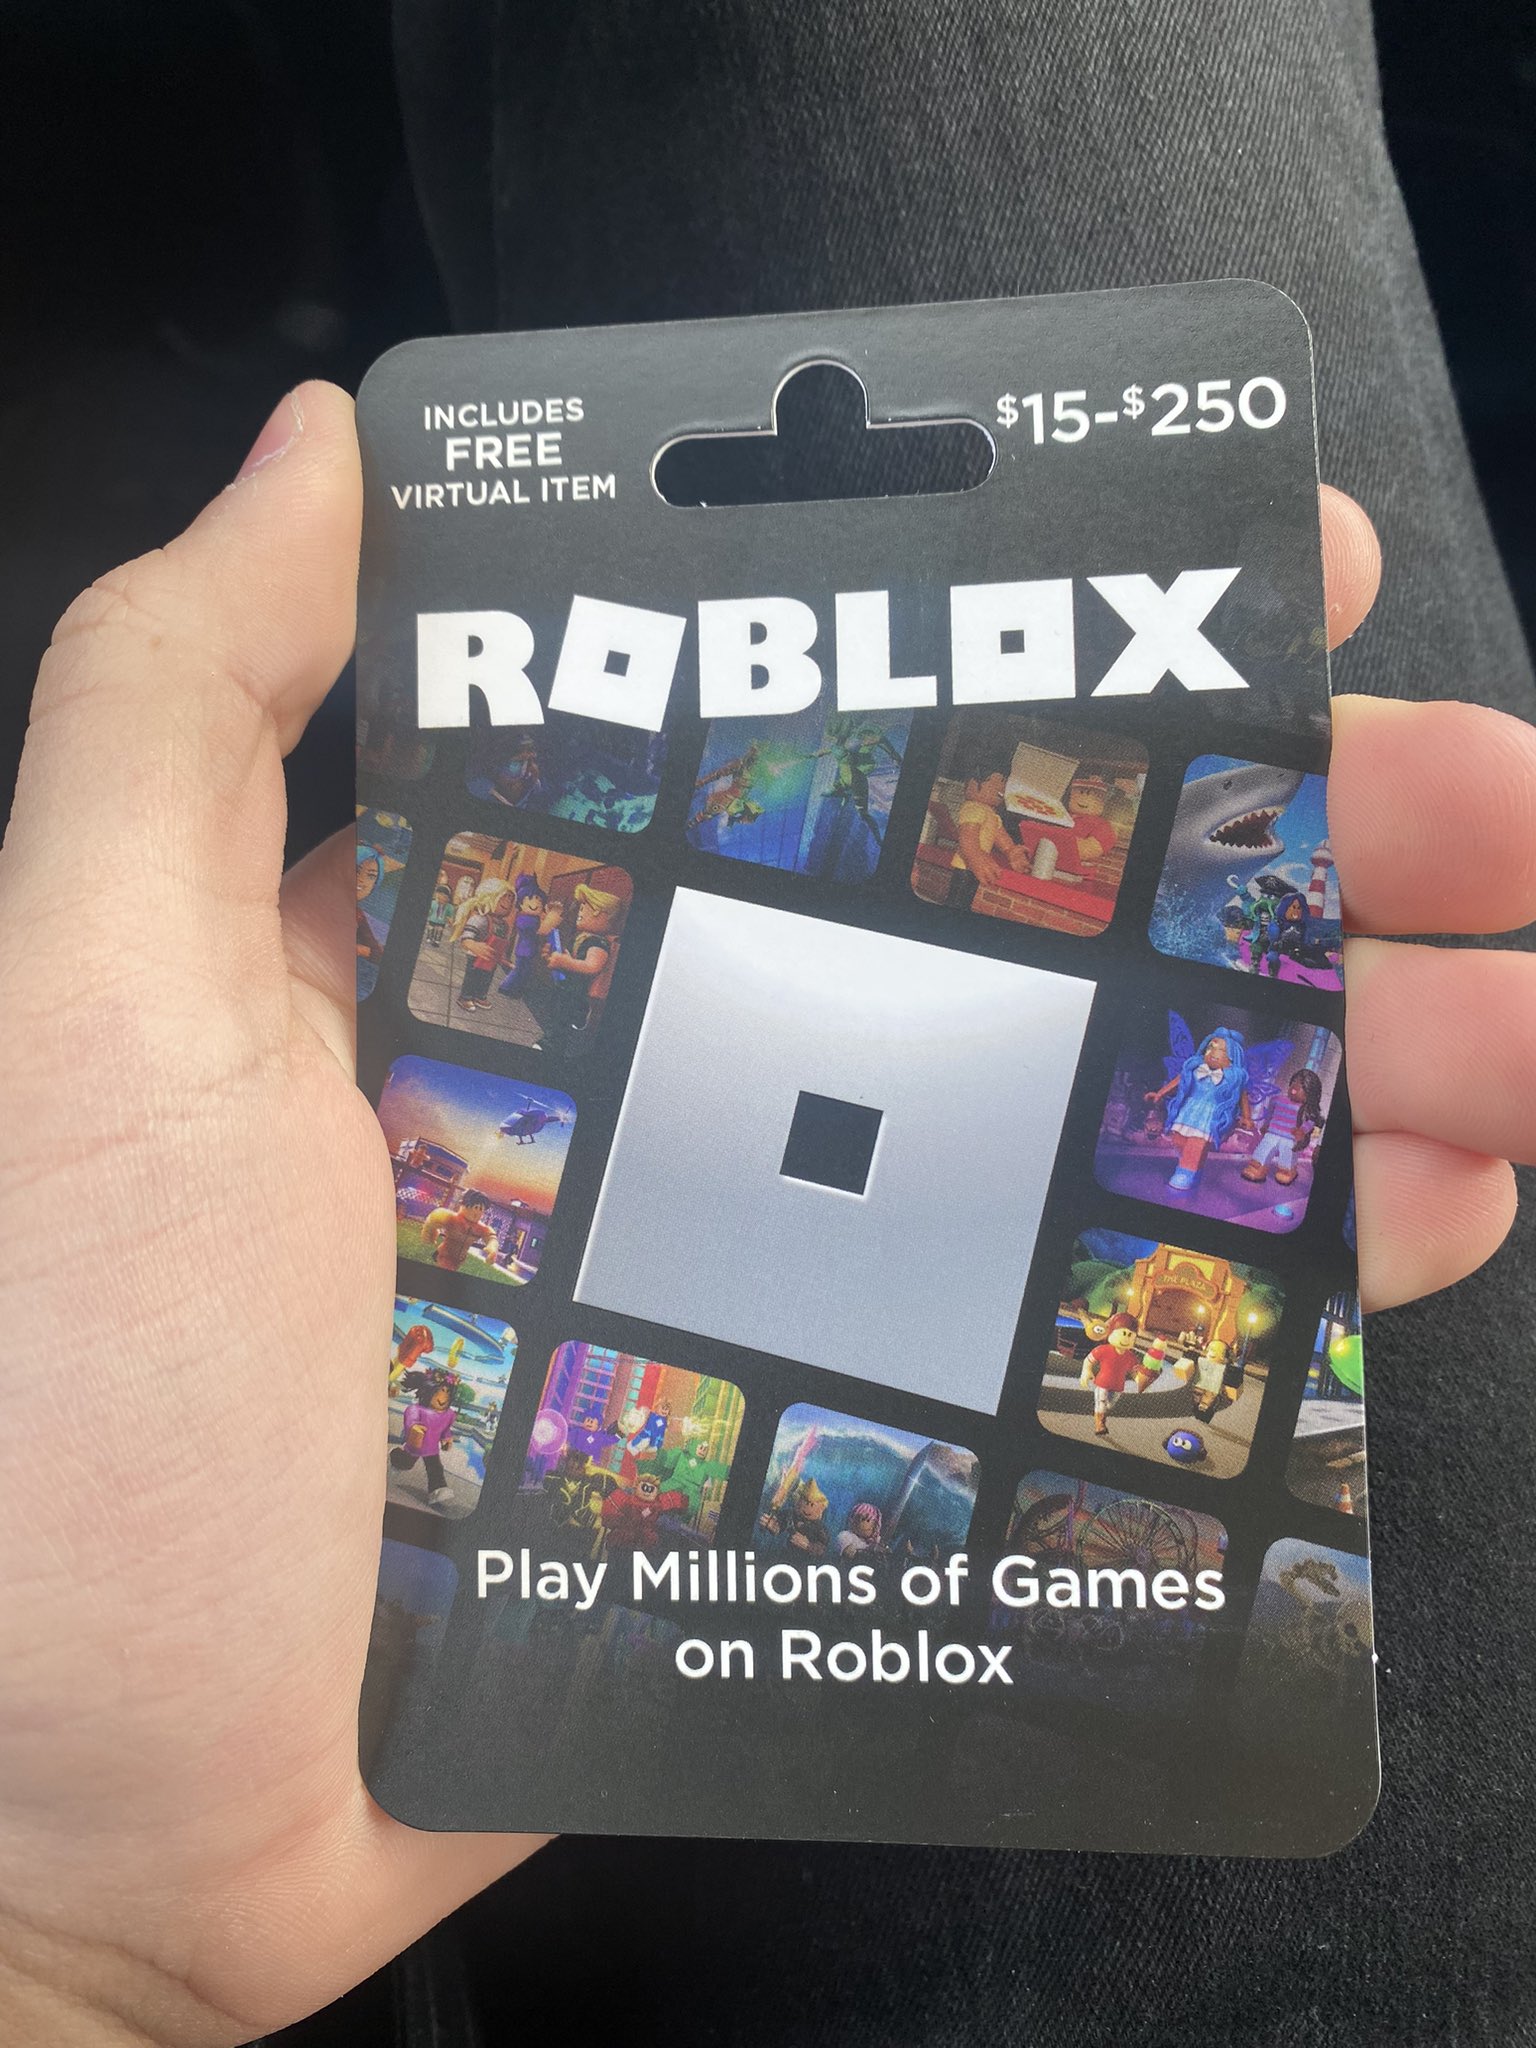 Gift Card de 100 robux - Roblox - Robux - GGMAX